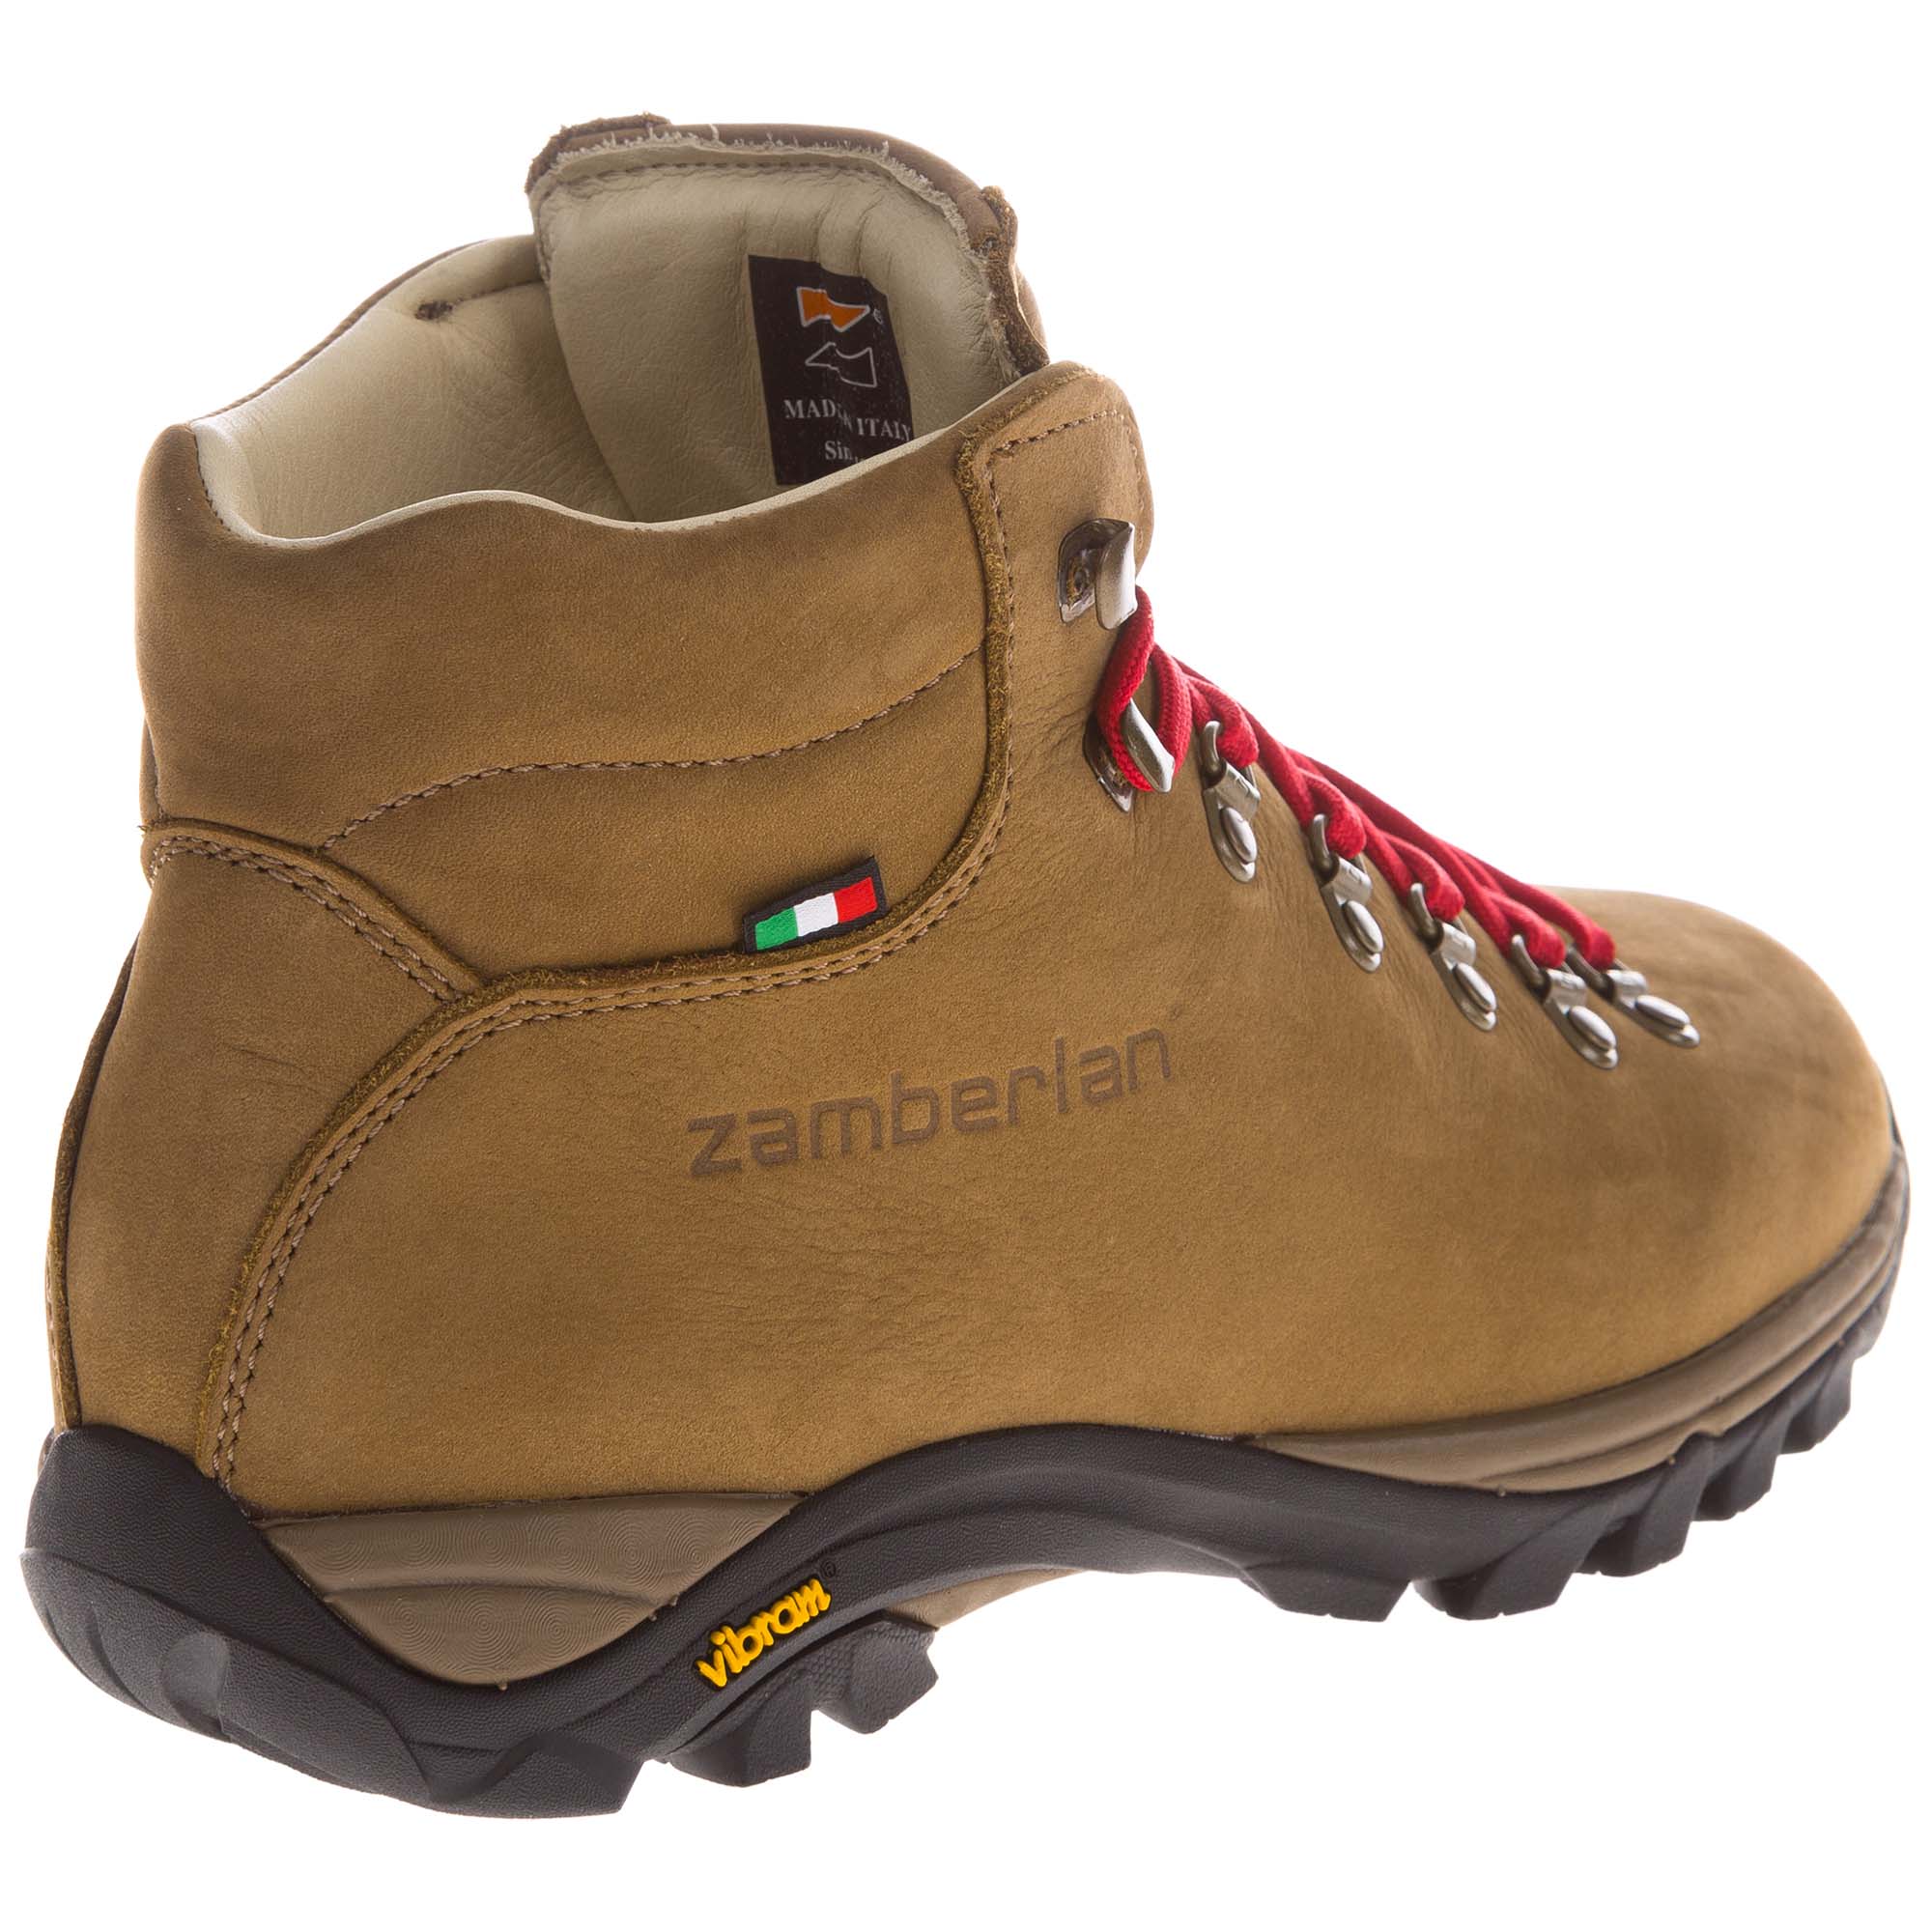 Zamberlan 321 New Trail Lite Evo LTH Bunion Women's Boots